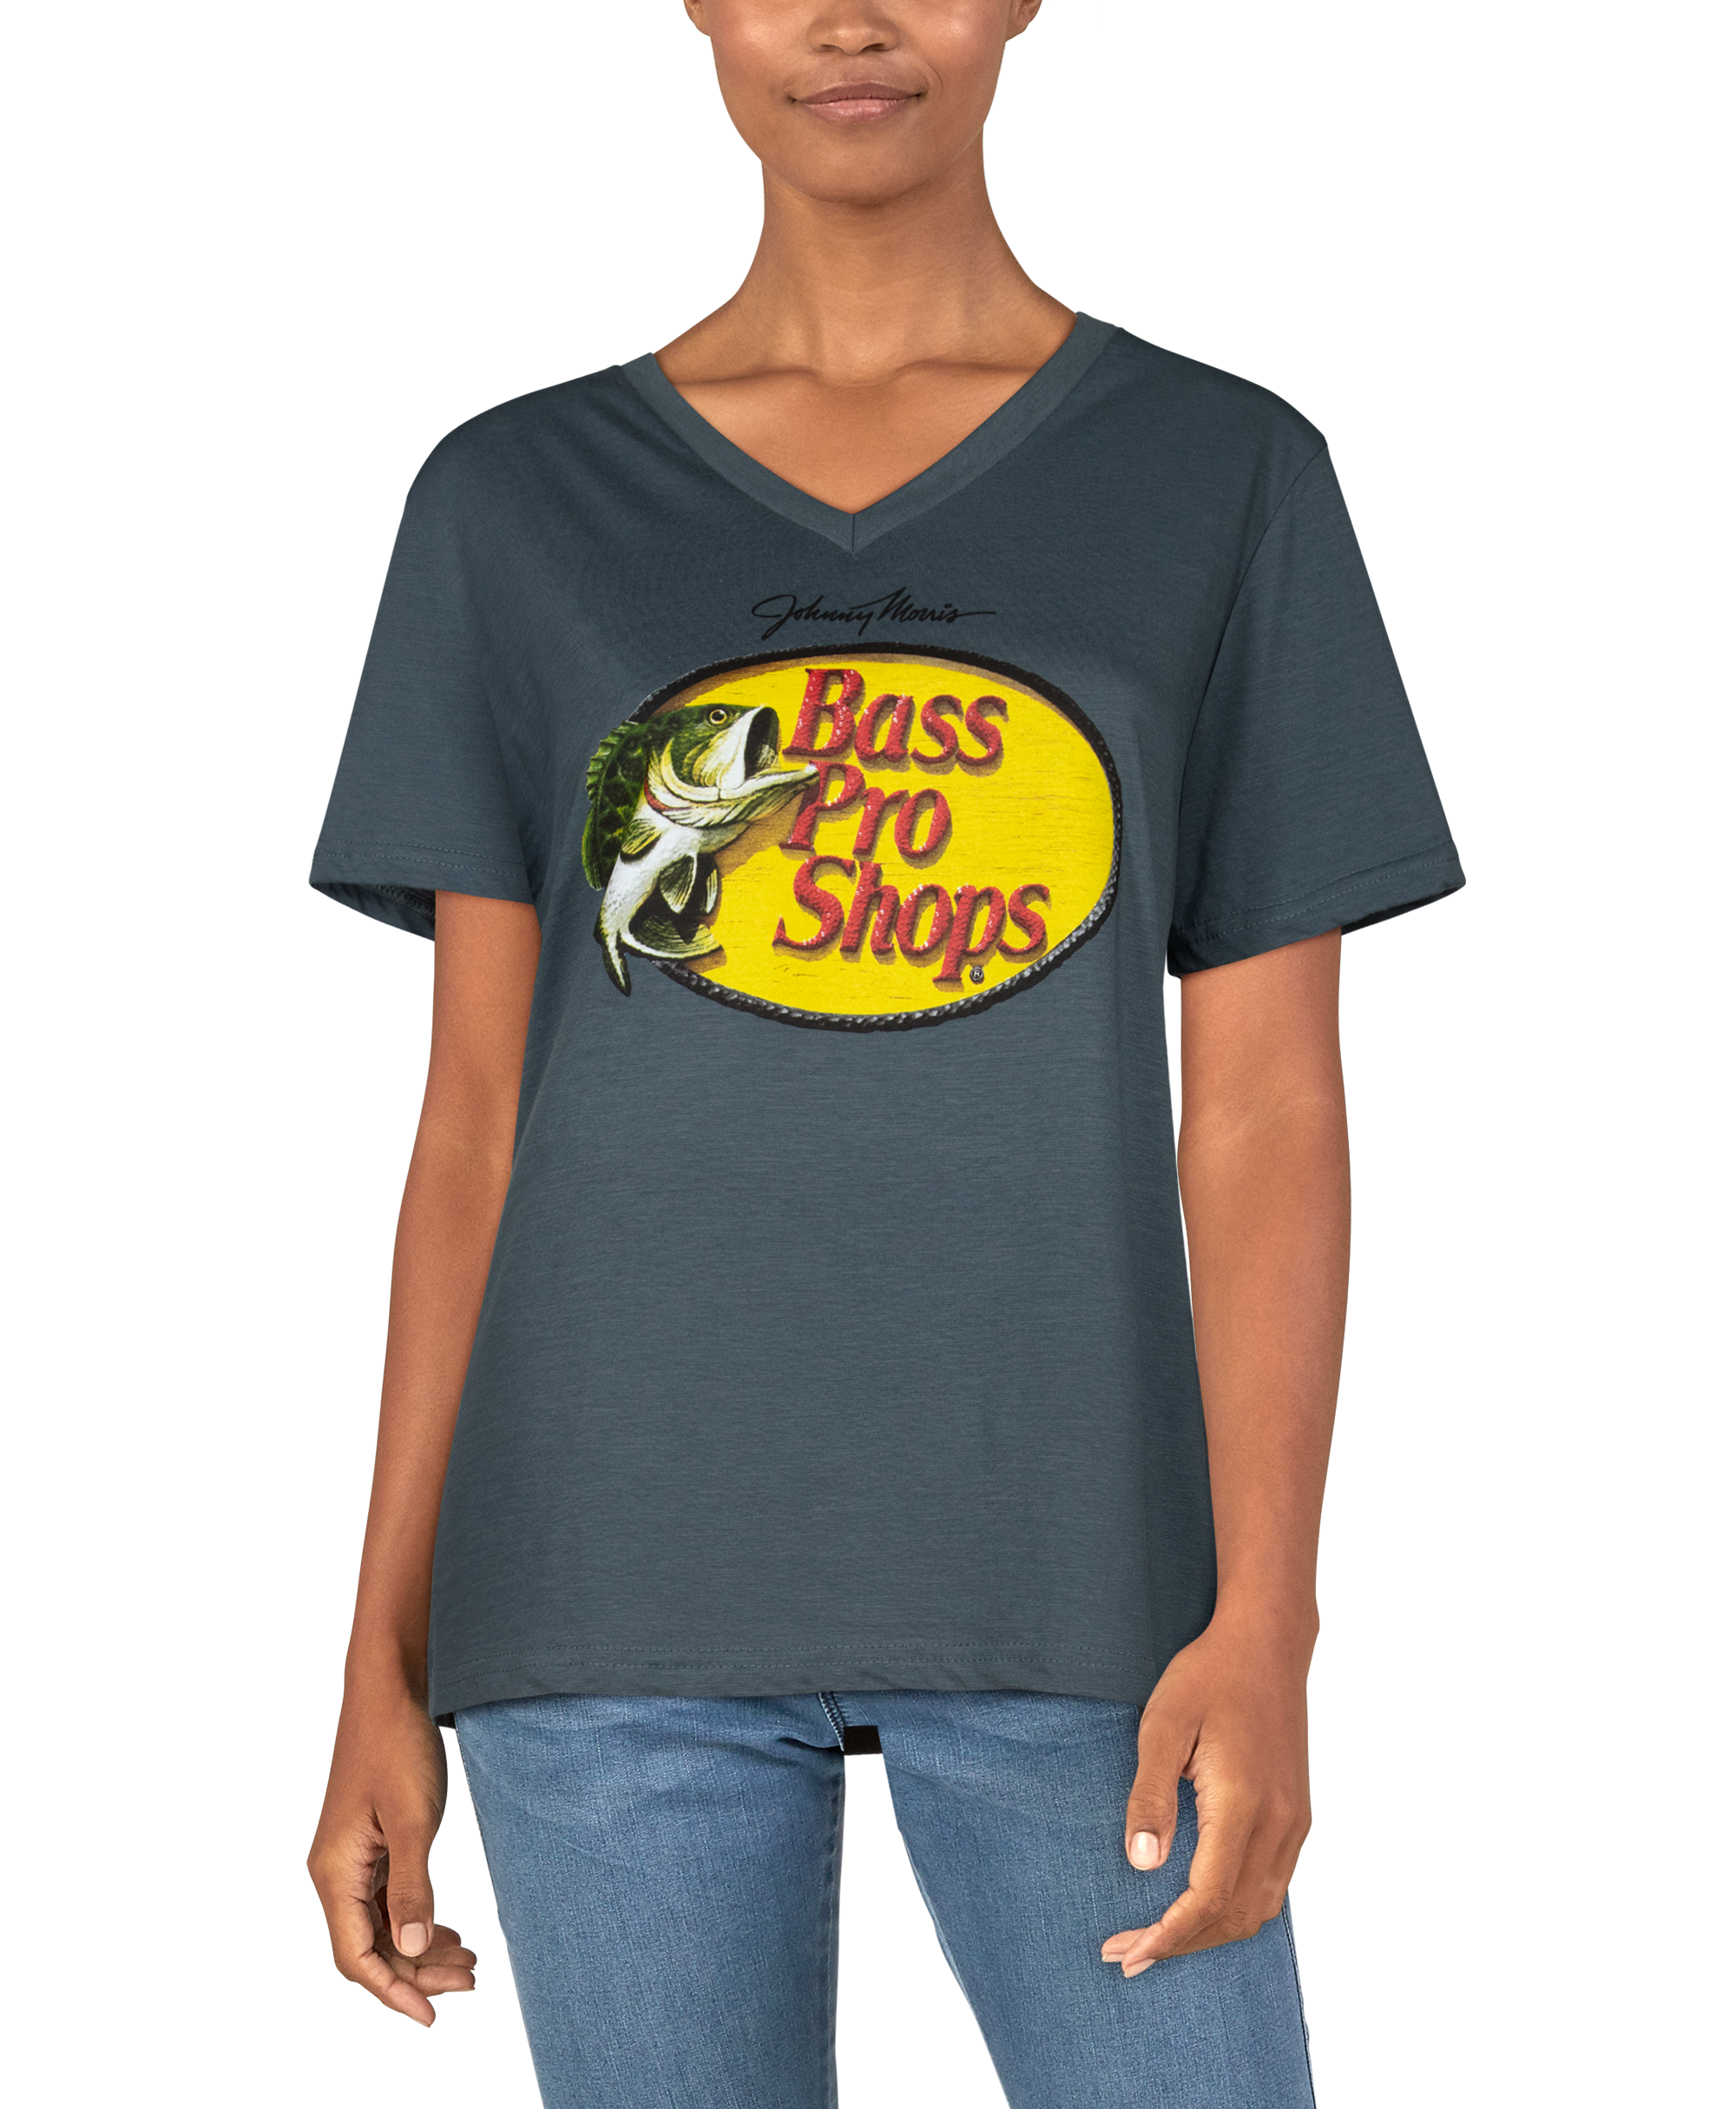 Bass Pro Shops Woodcut Logo V-Neck Short-Sleeve T-Shirt for Ladies